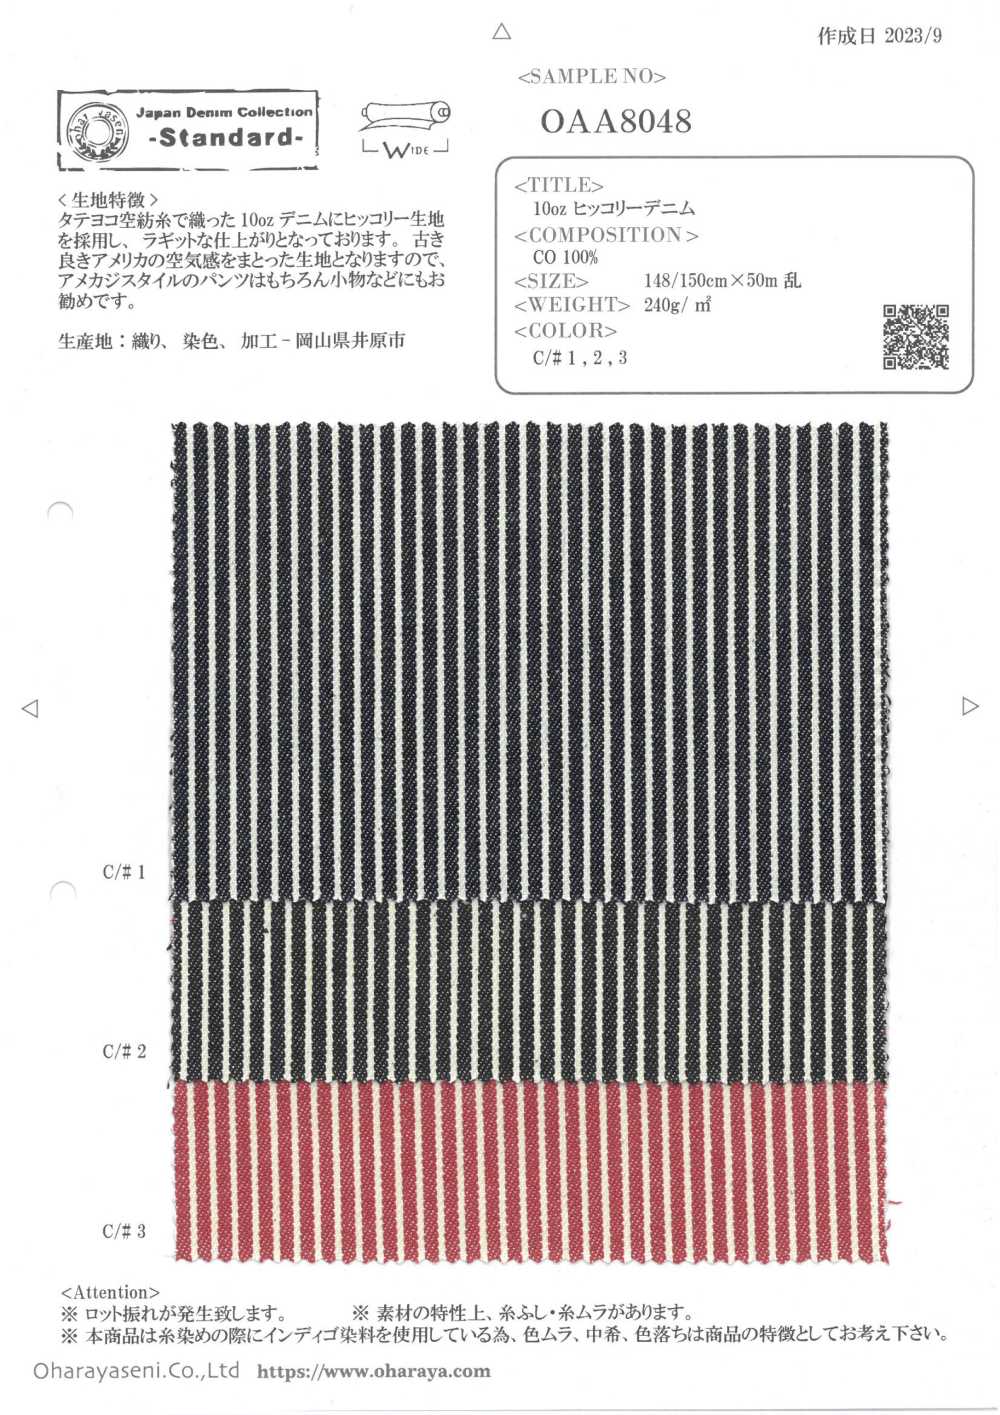 OAA8048 Denim Hickory 10oz[Fabrication De Textile] Oharayaseni